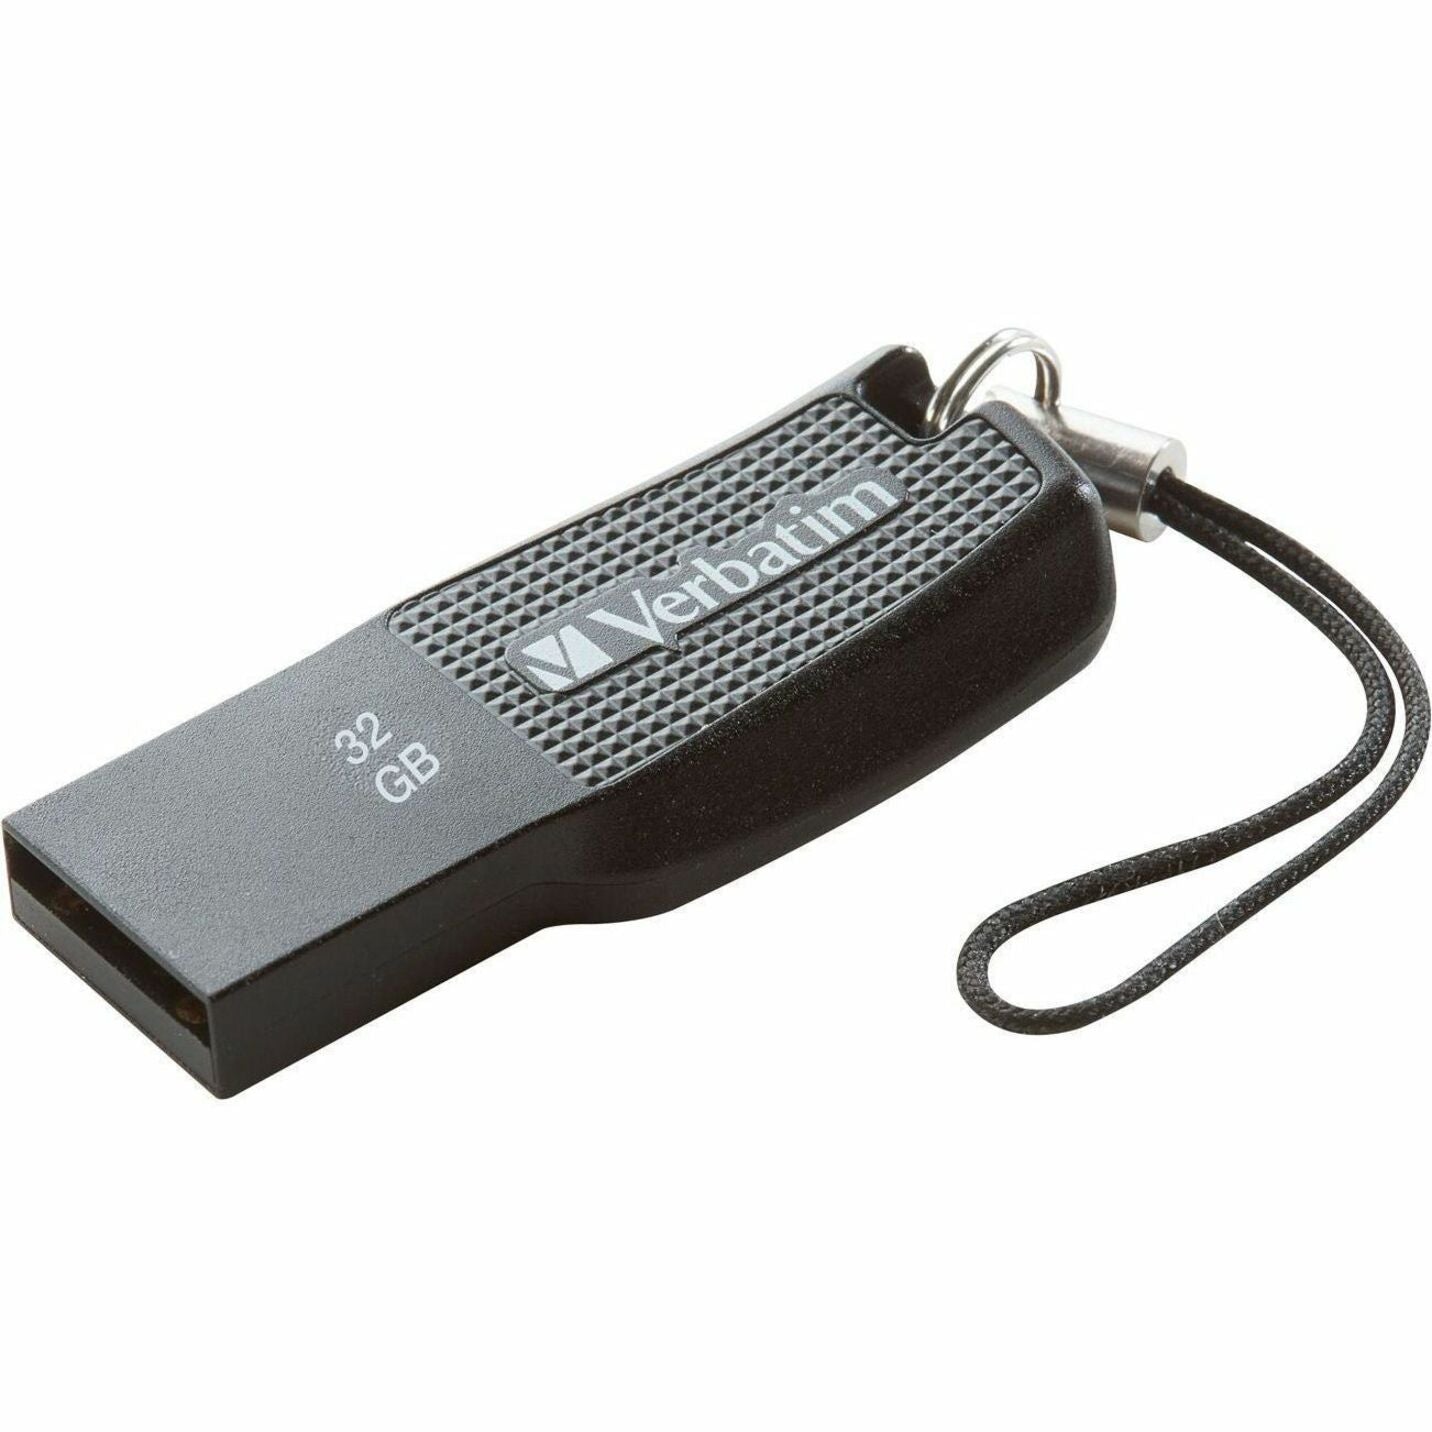 Verbatim 70876 32GB Ergo USB Flash Drive - Black, Capless, Password Protection